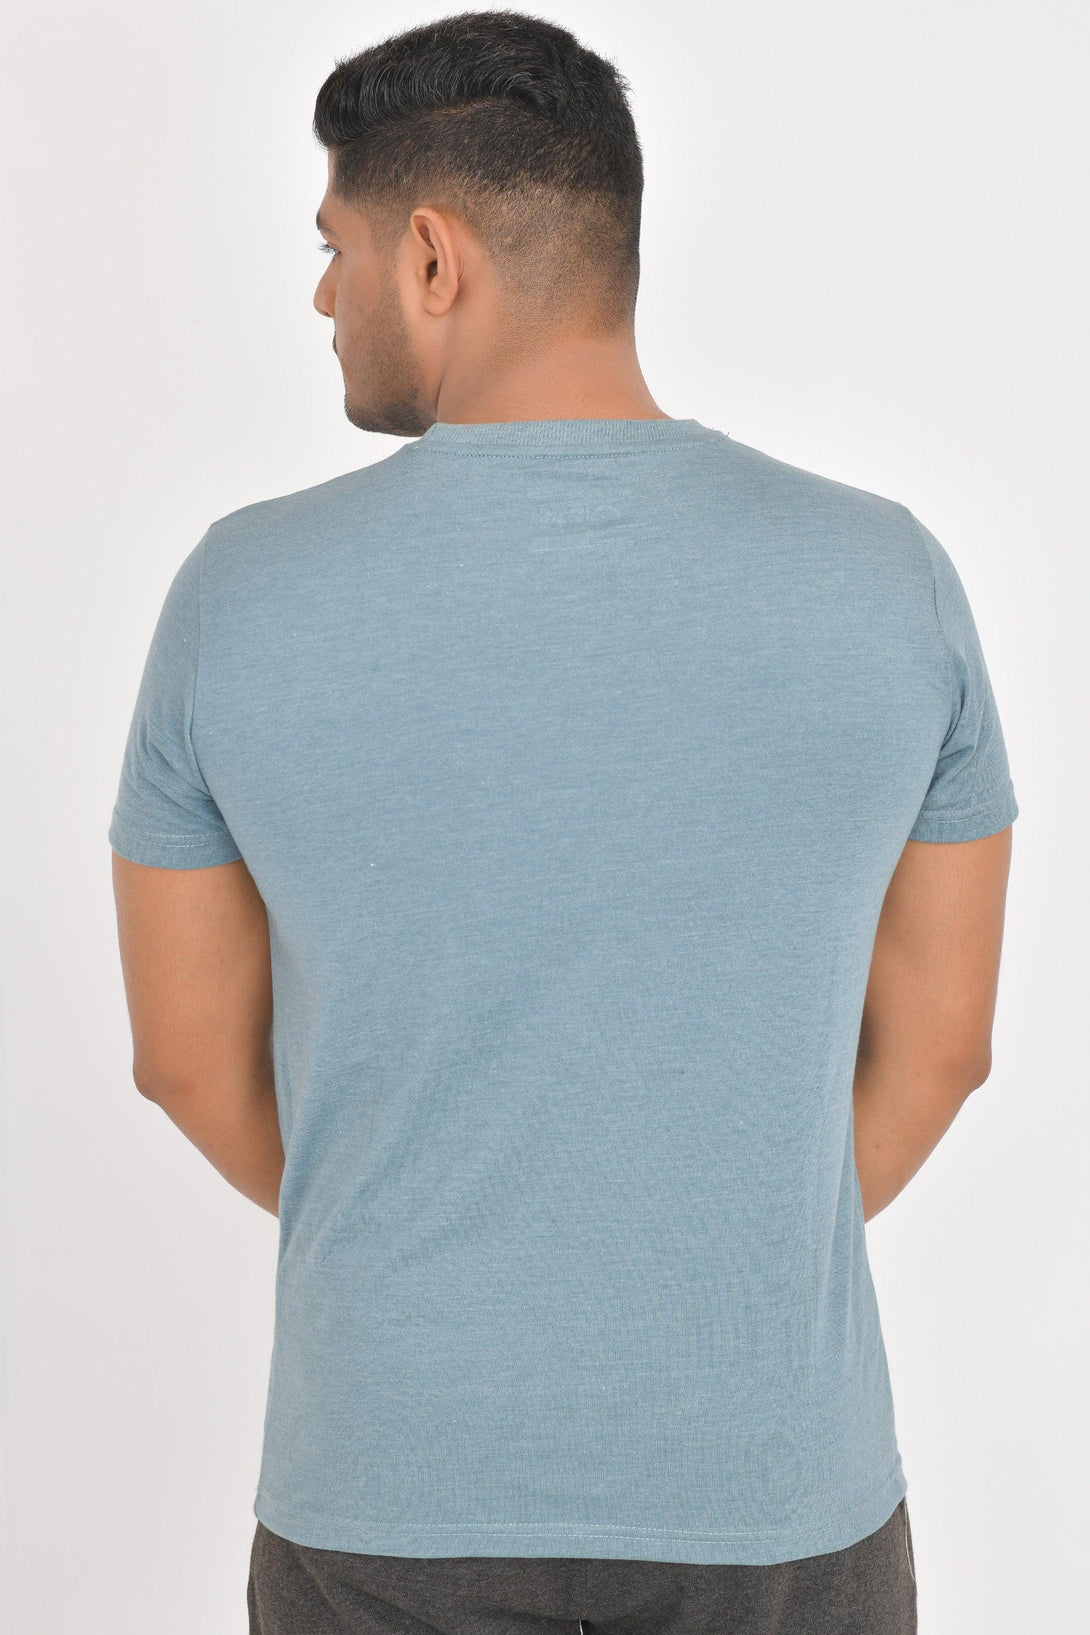 Round Neck T-Shirts | TAN - SLATE - AQUA - Pack of 3 - FTS